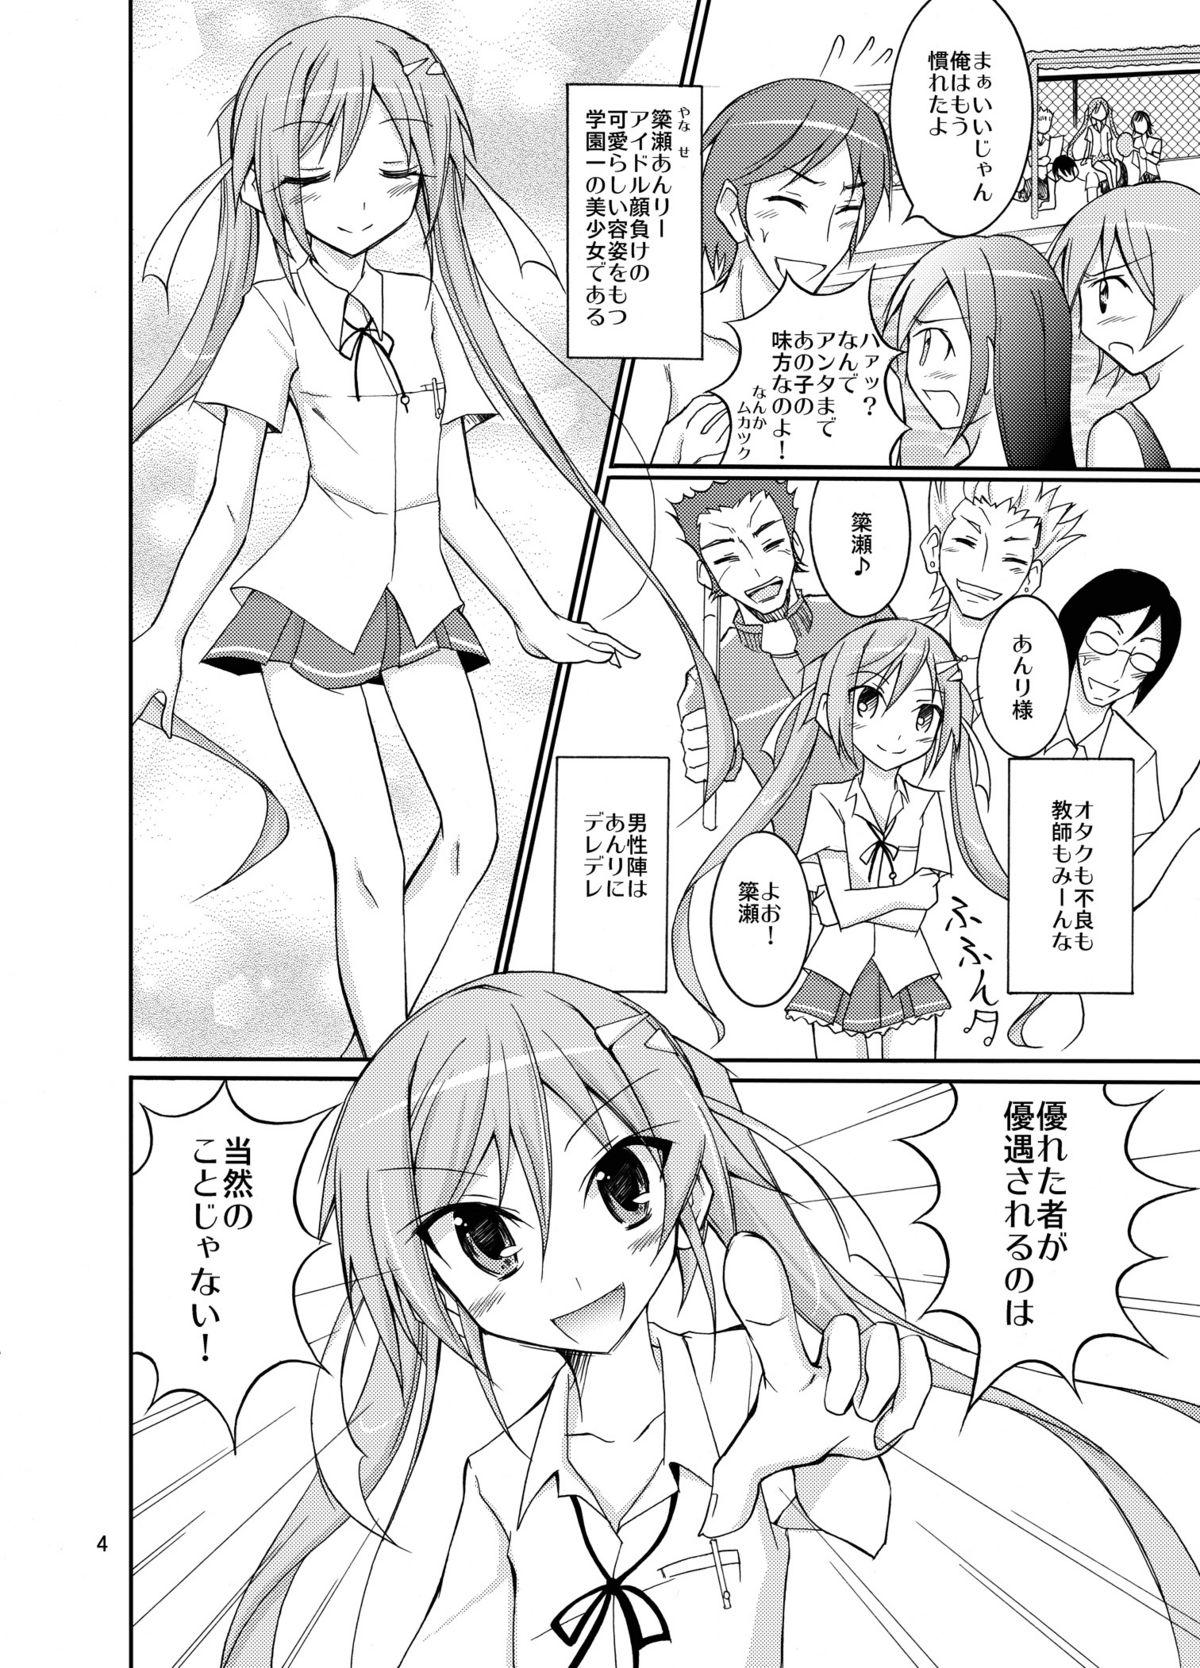 Blowing Kyou no Taiiku wa Zenra Suiei 3 Bedroom - Page 3